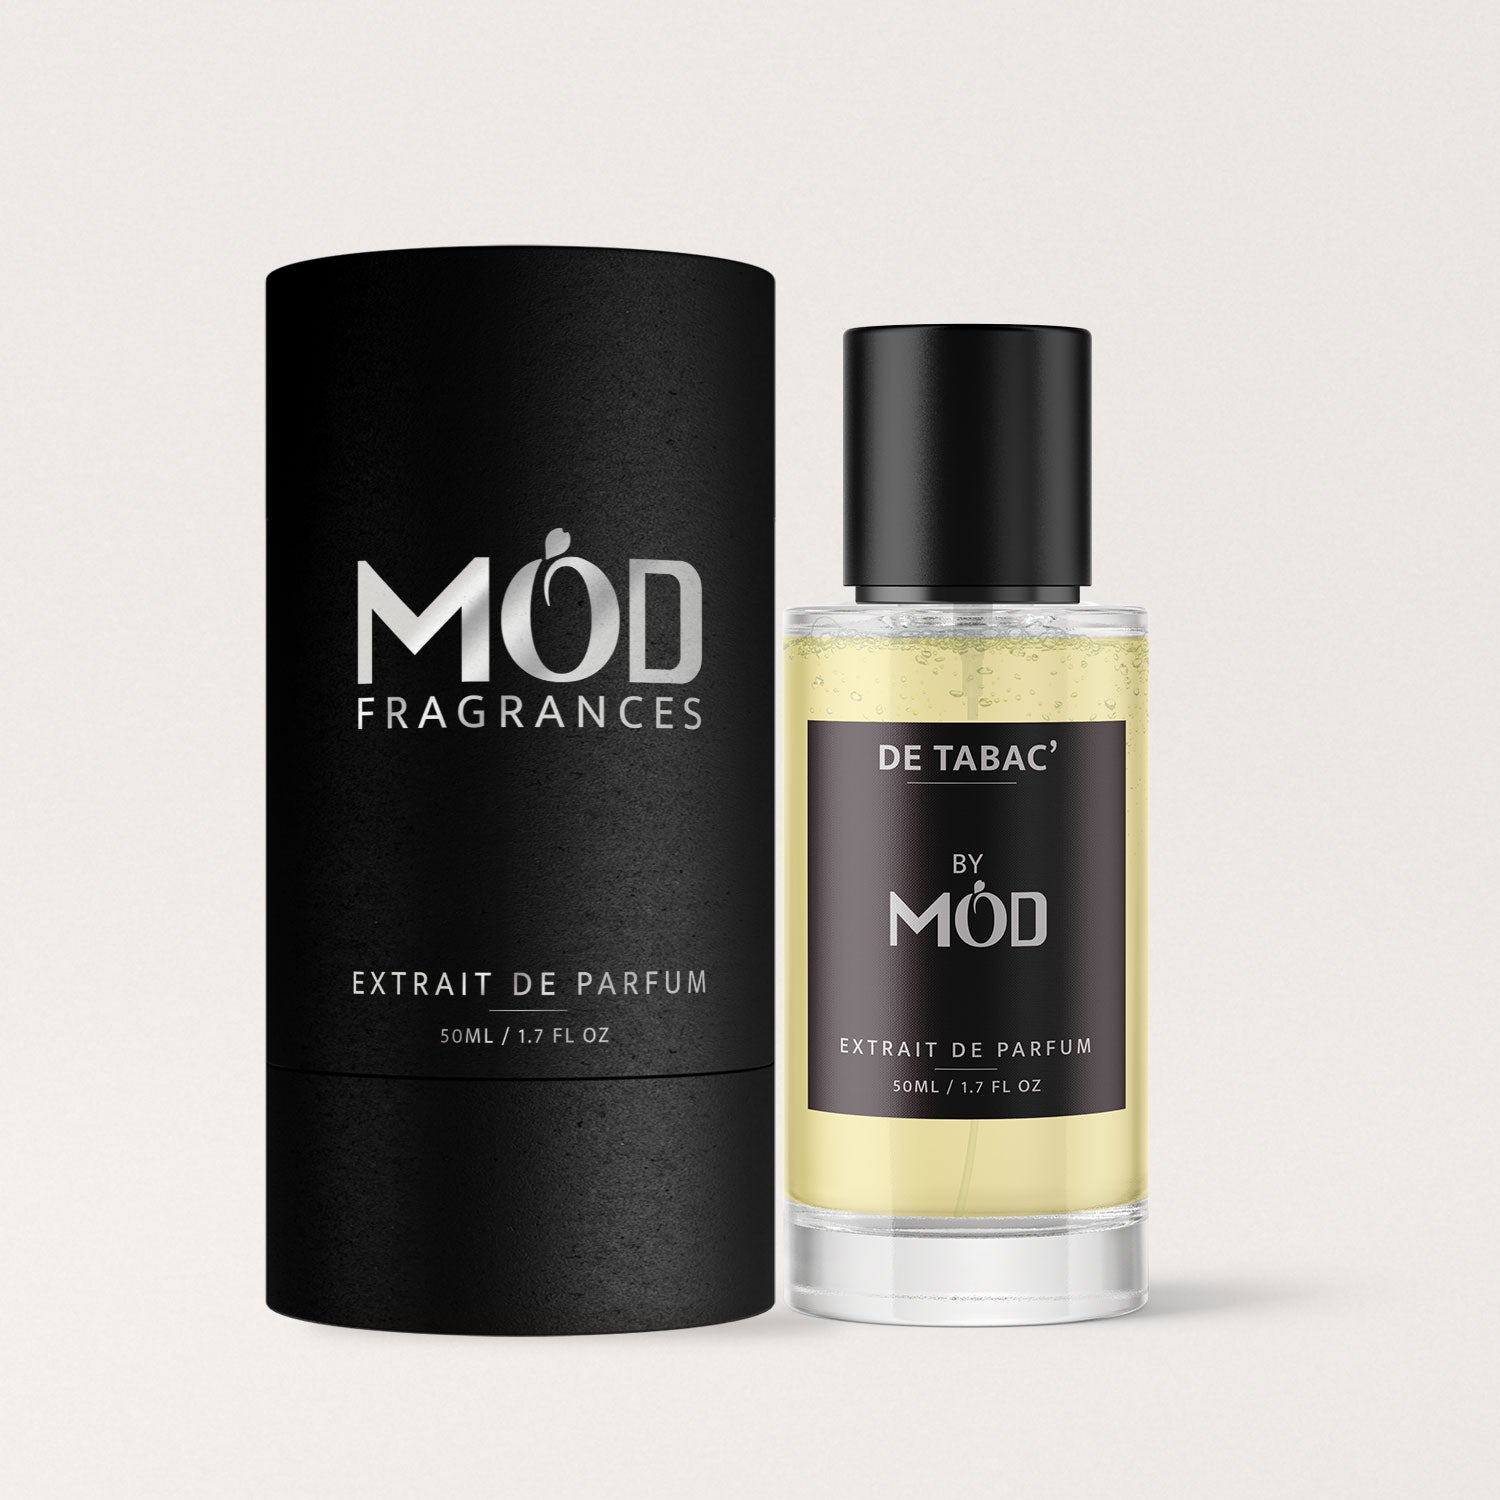 de Tabac' - Mod Fragrances